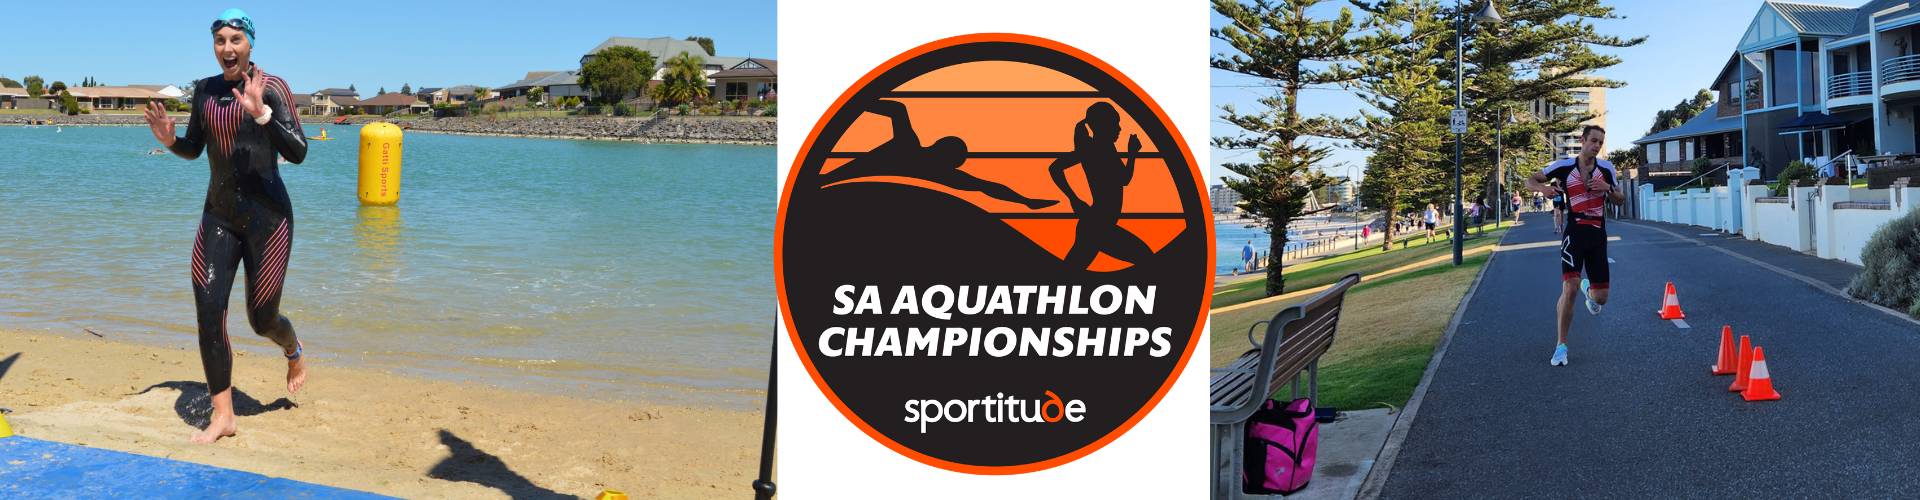 SA Aquathlon Championships